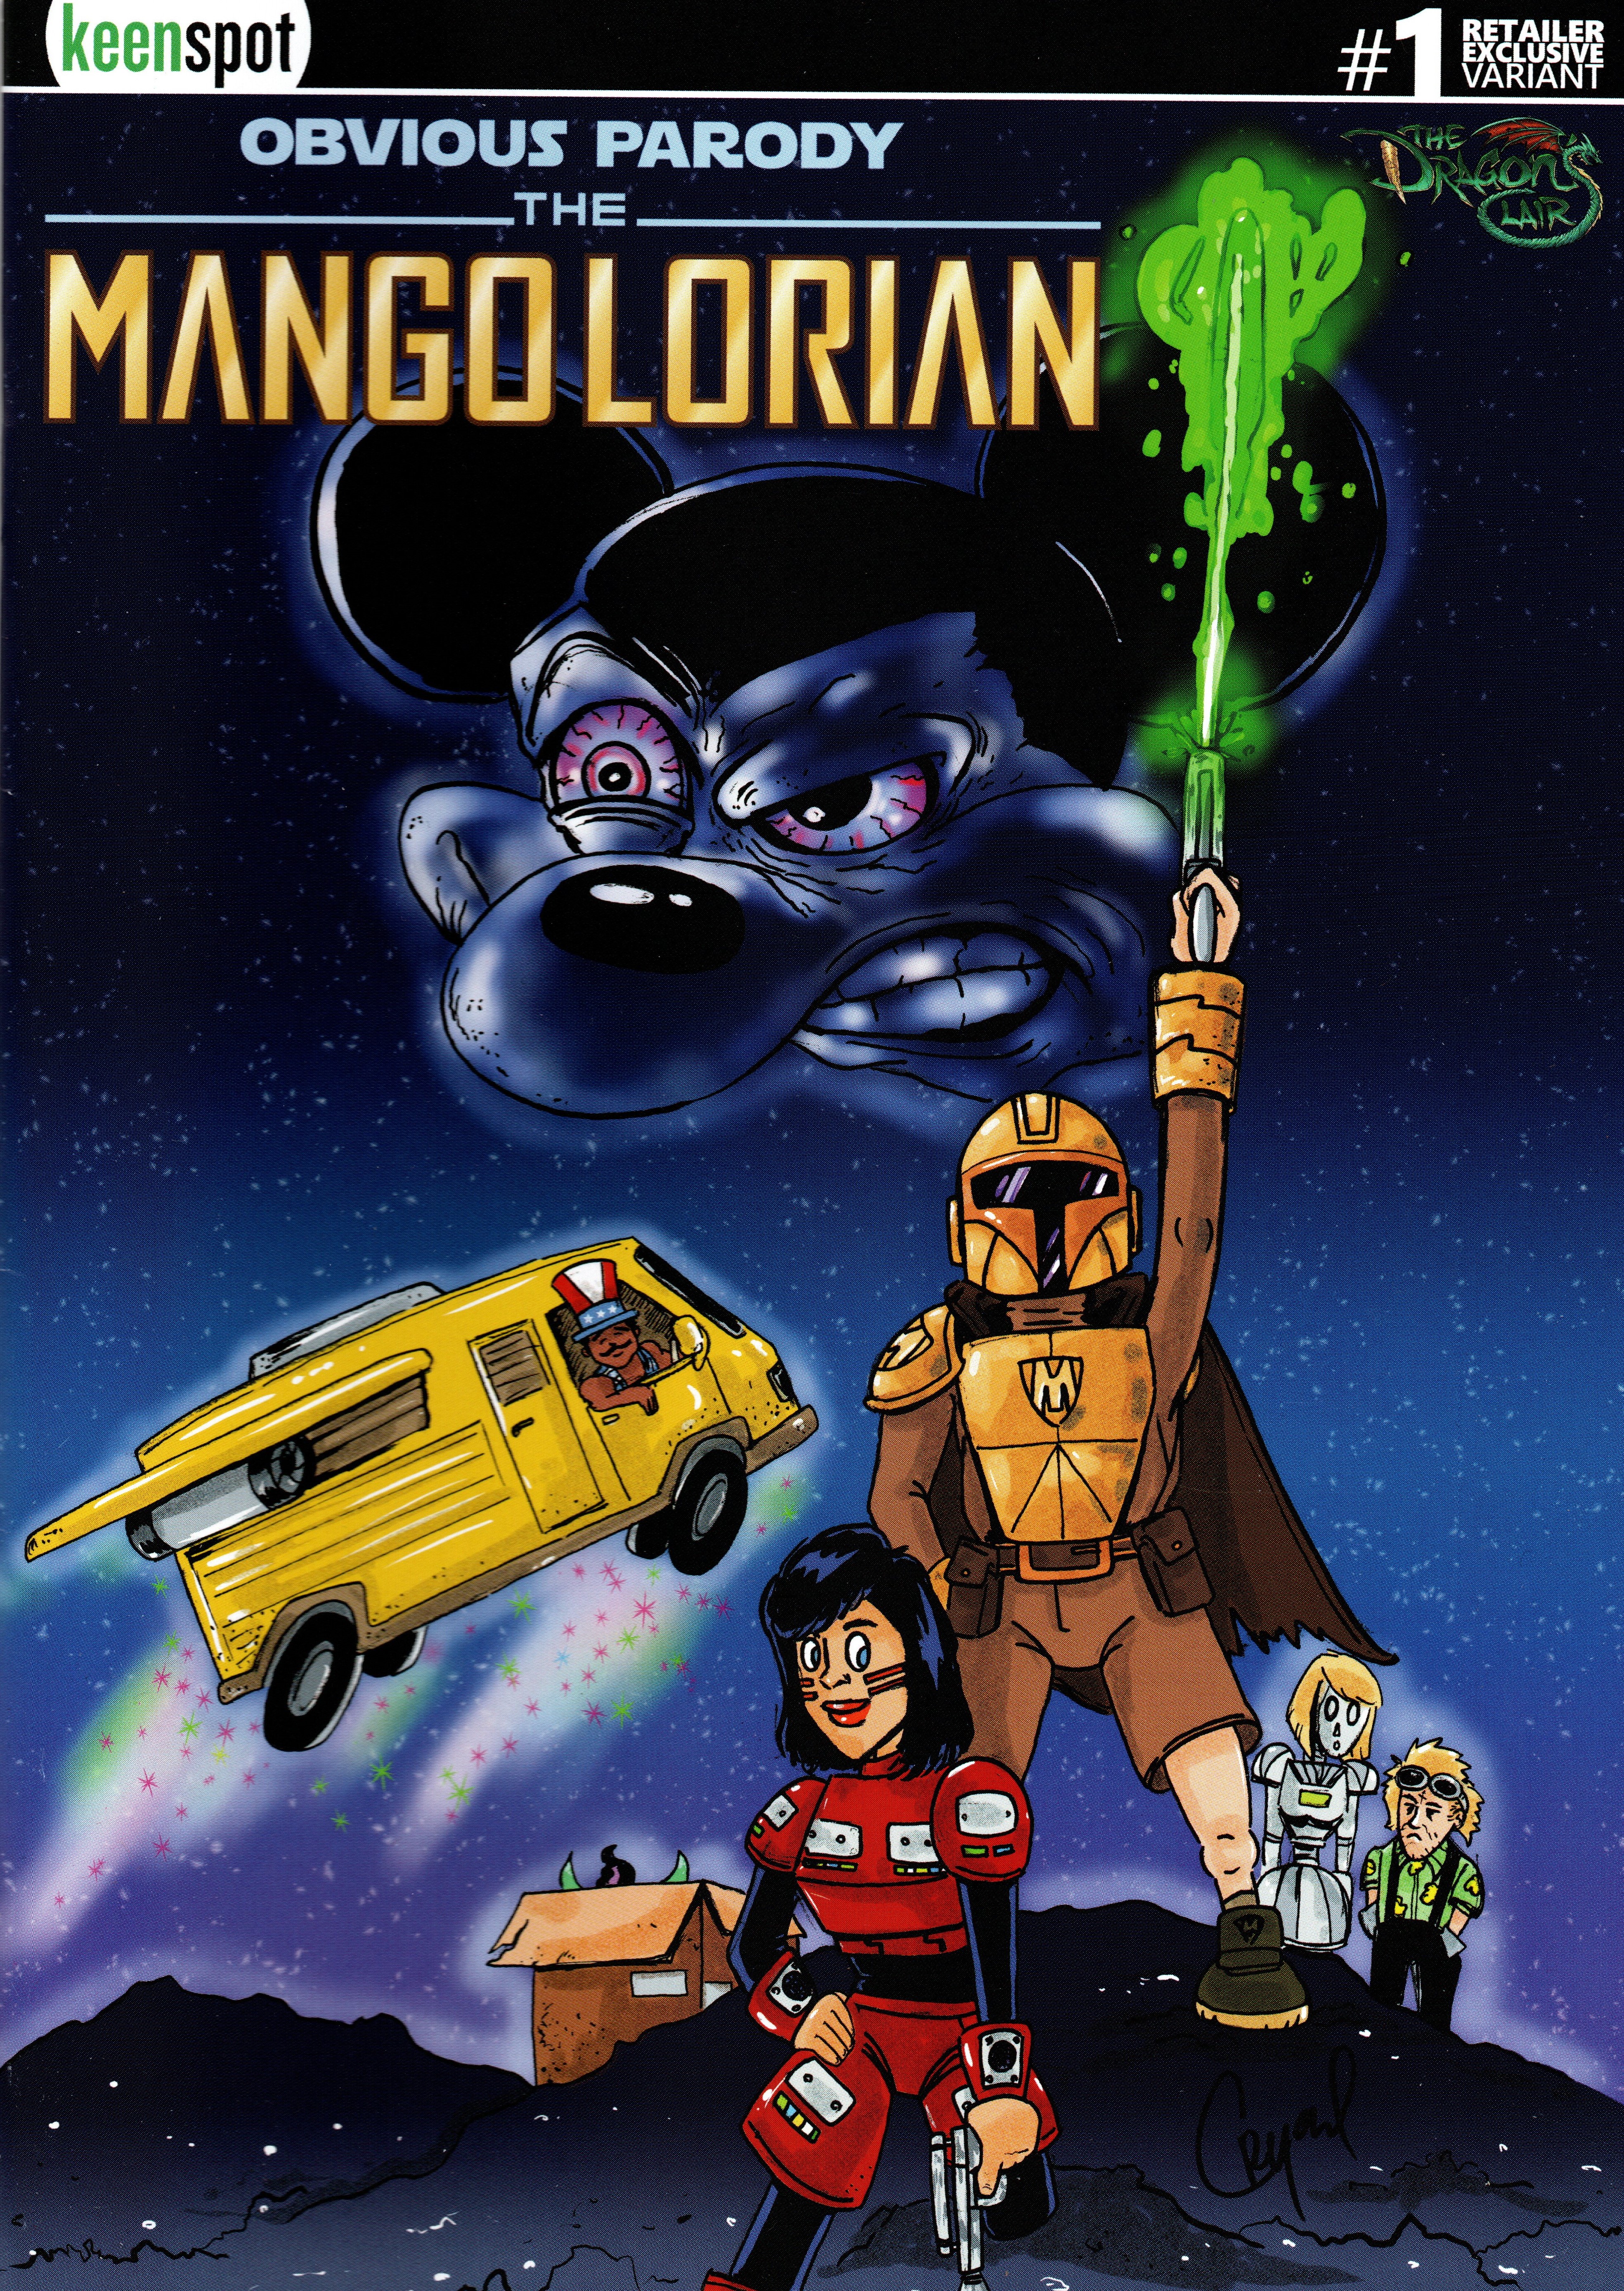 The Mangolorian